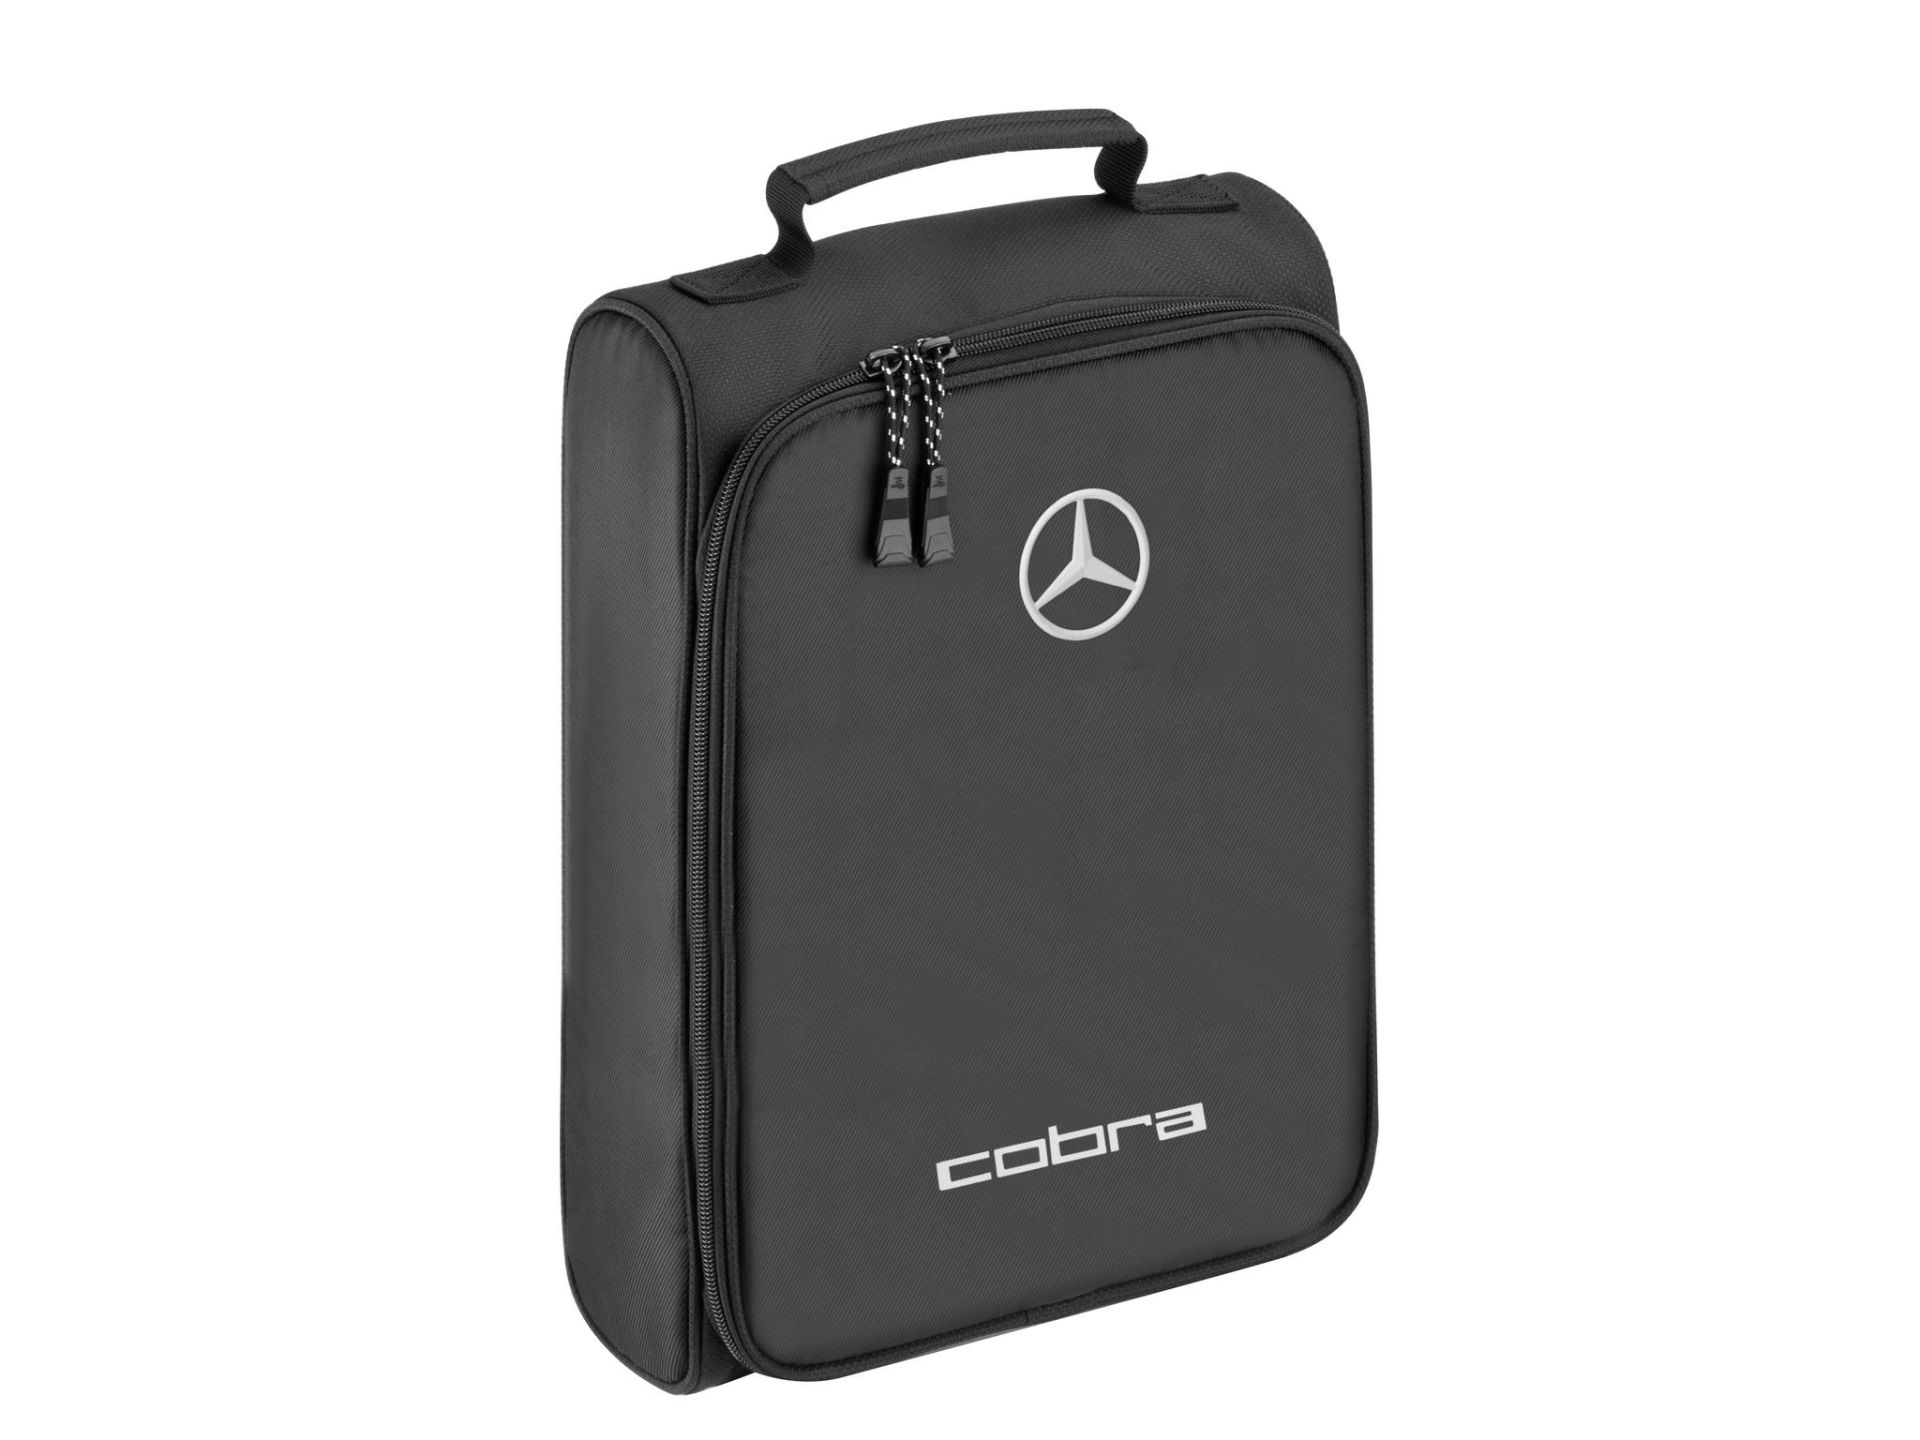 Laptop Bag (Mercedes Benz)